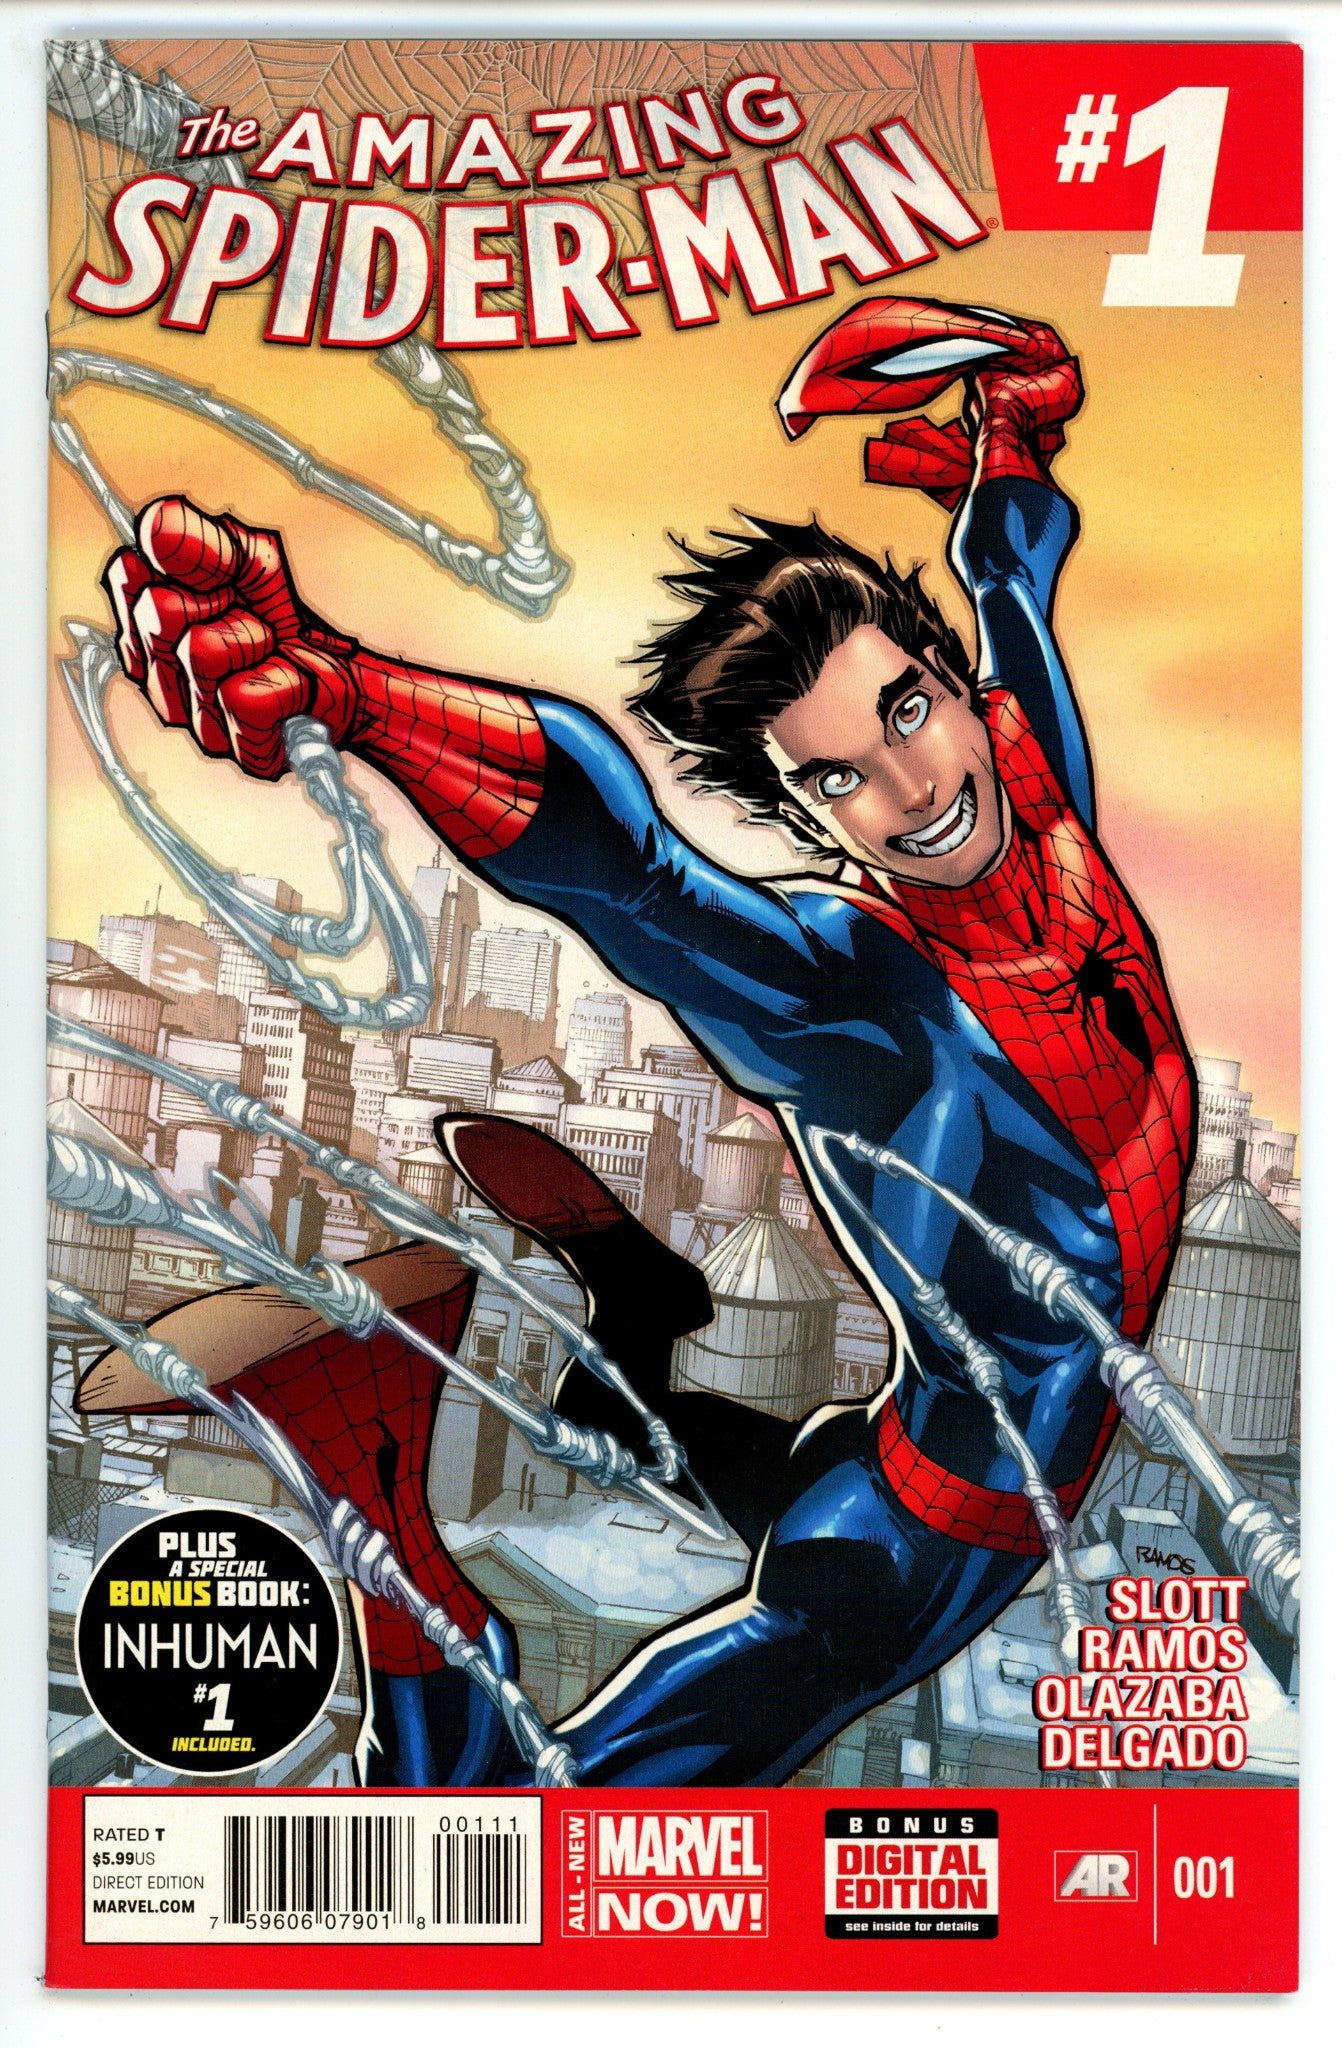 The Amazing Spider-Man Vol 3 1 VF+ (8.5) (2014) 